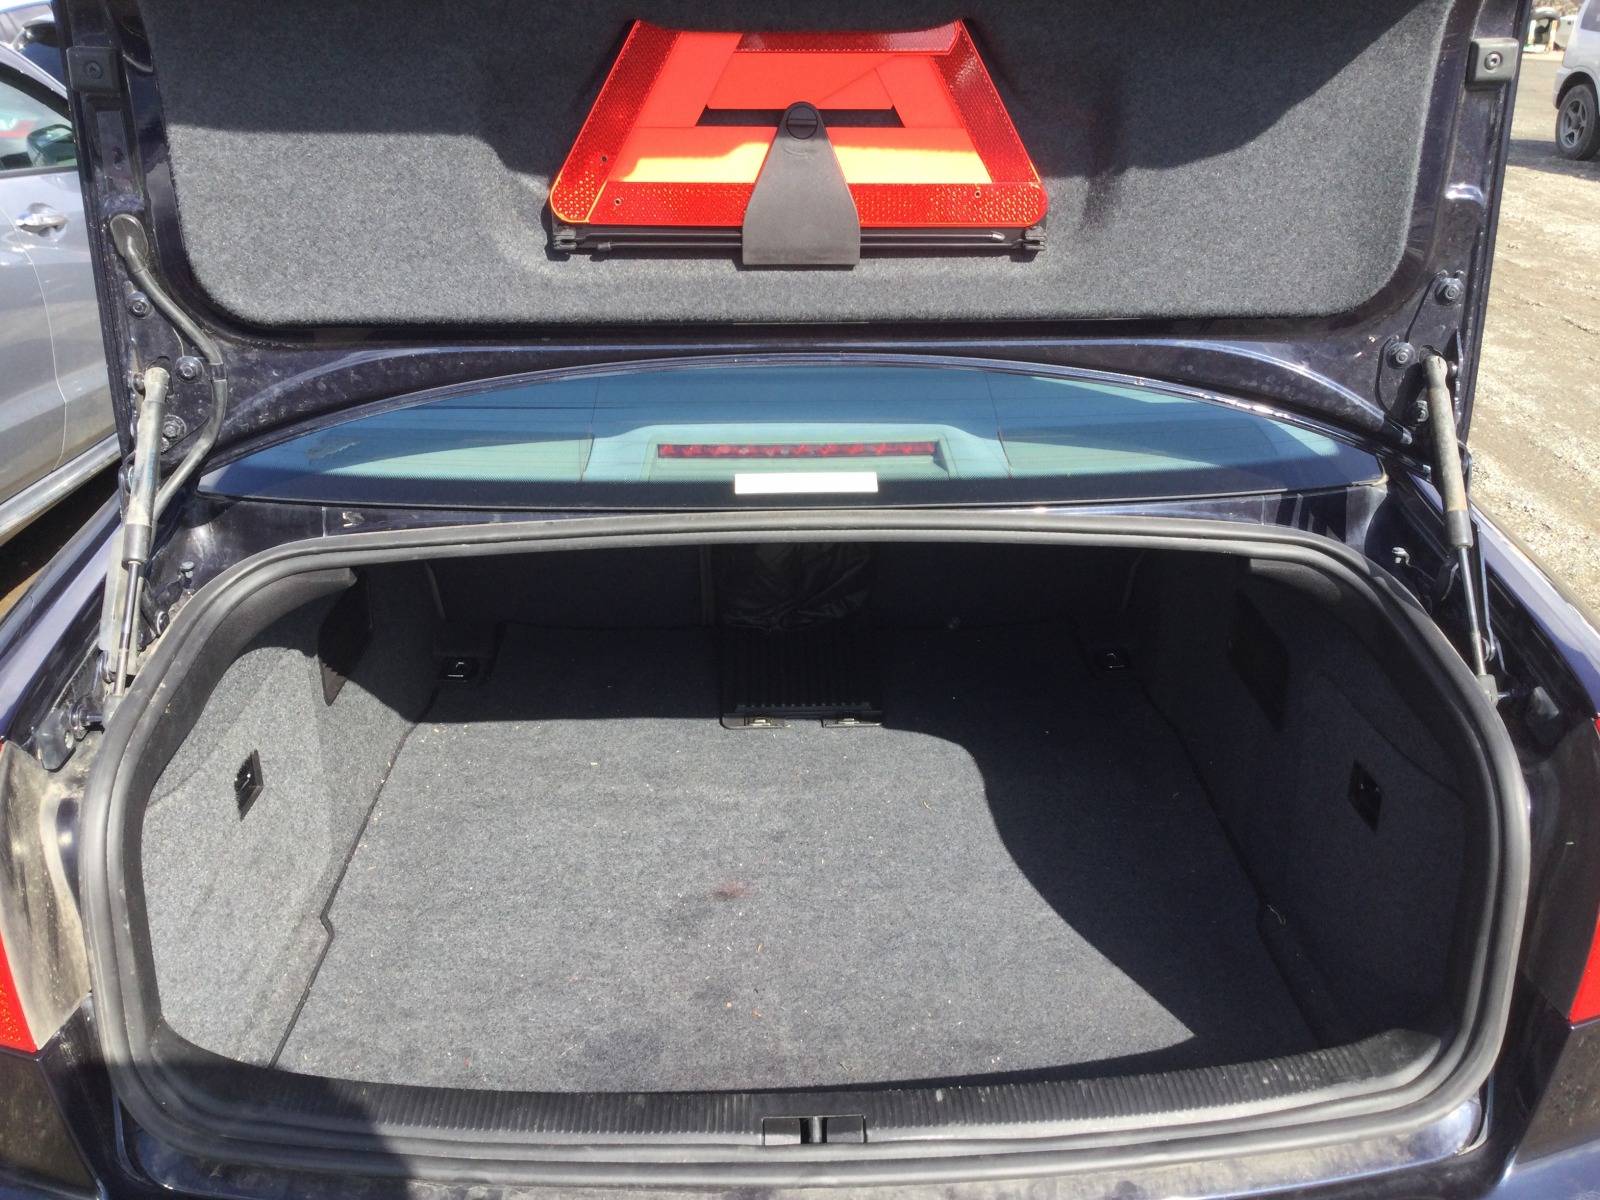 82 980. Audi a6 c5 Авант размер багажника.